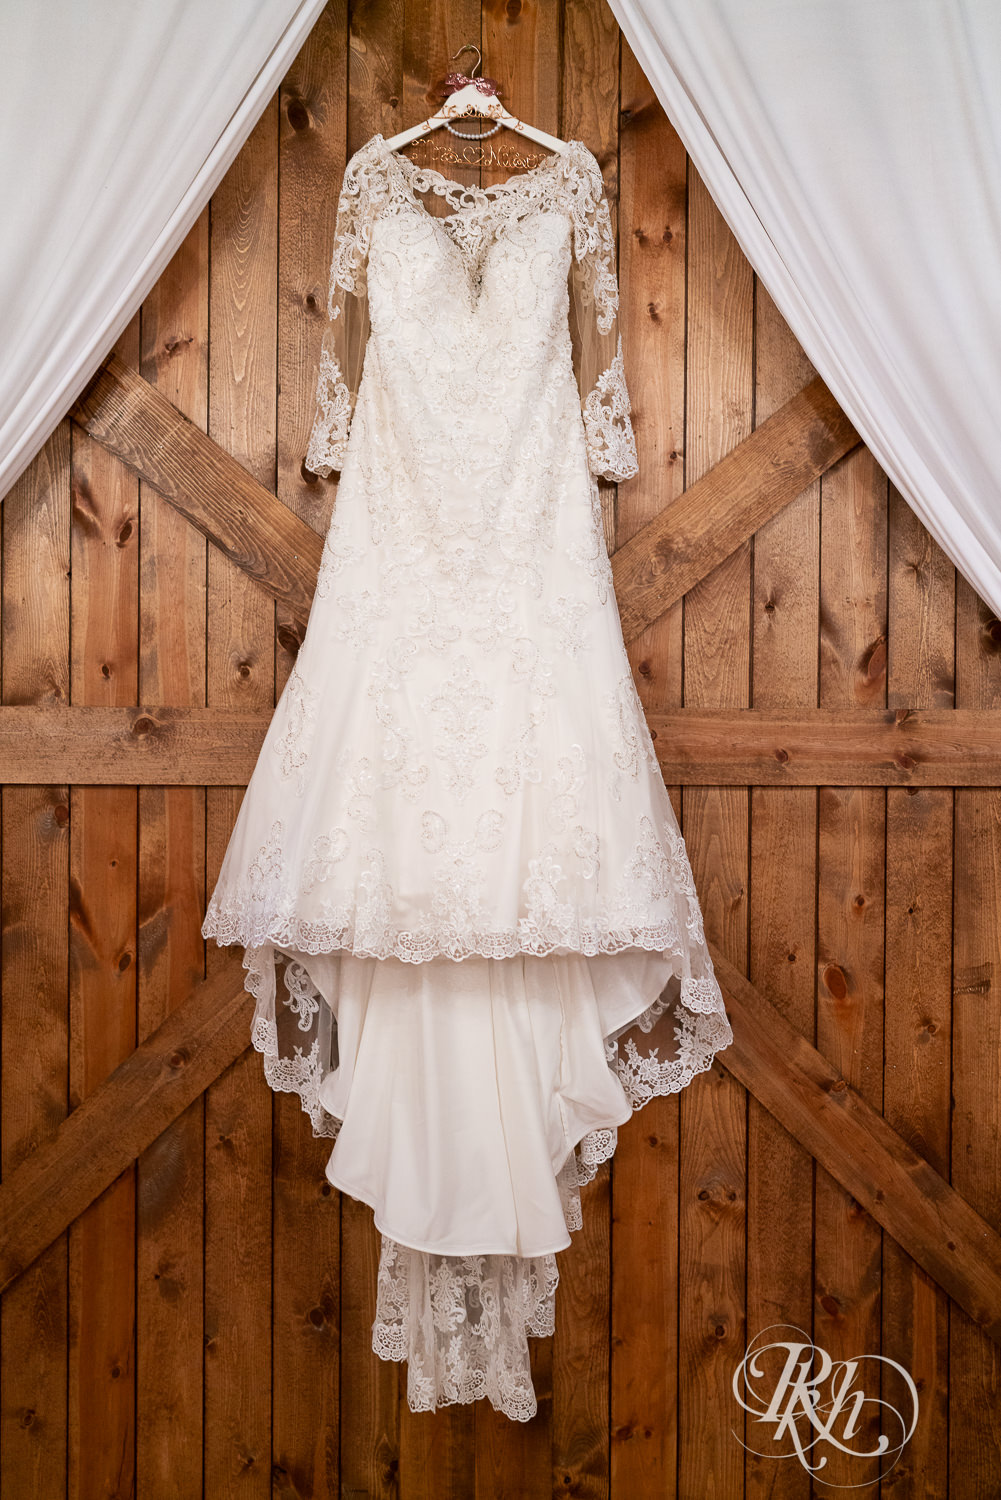 Wedding dress hanging on barn door at Hope Glen Farm in Cottage Grove, Minnesota.